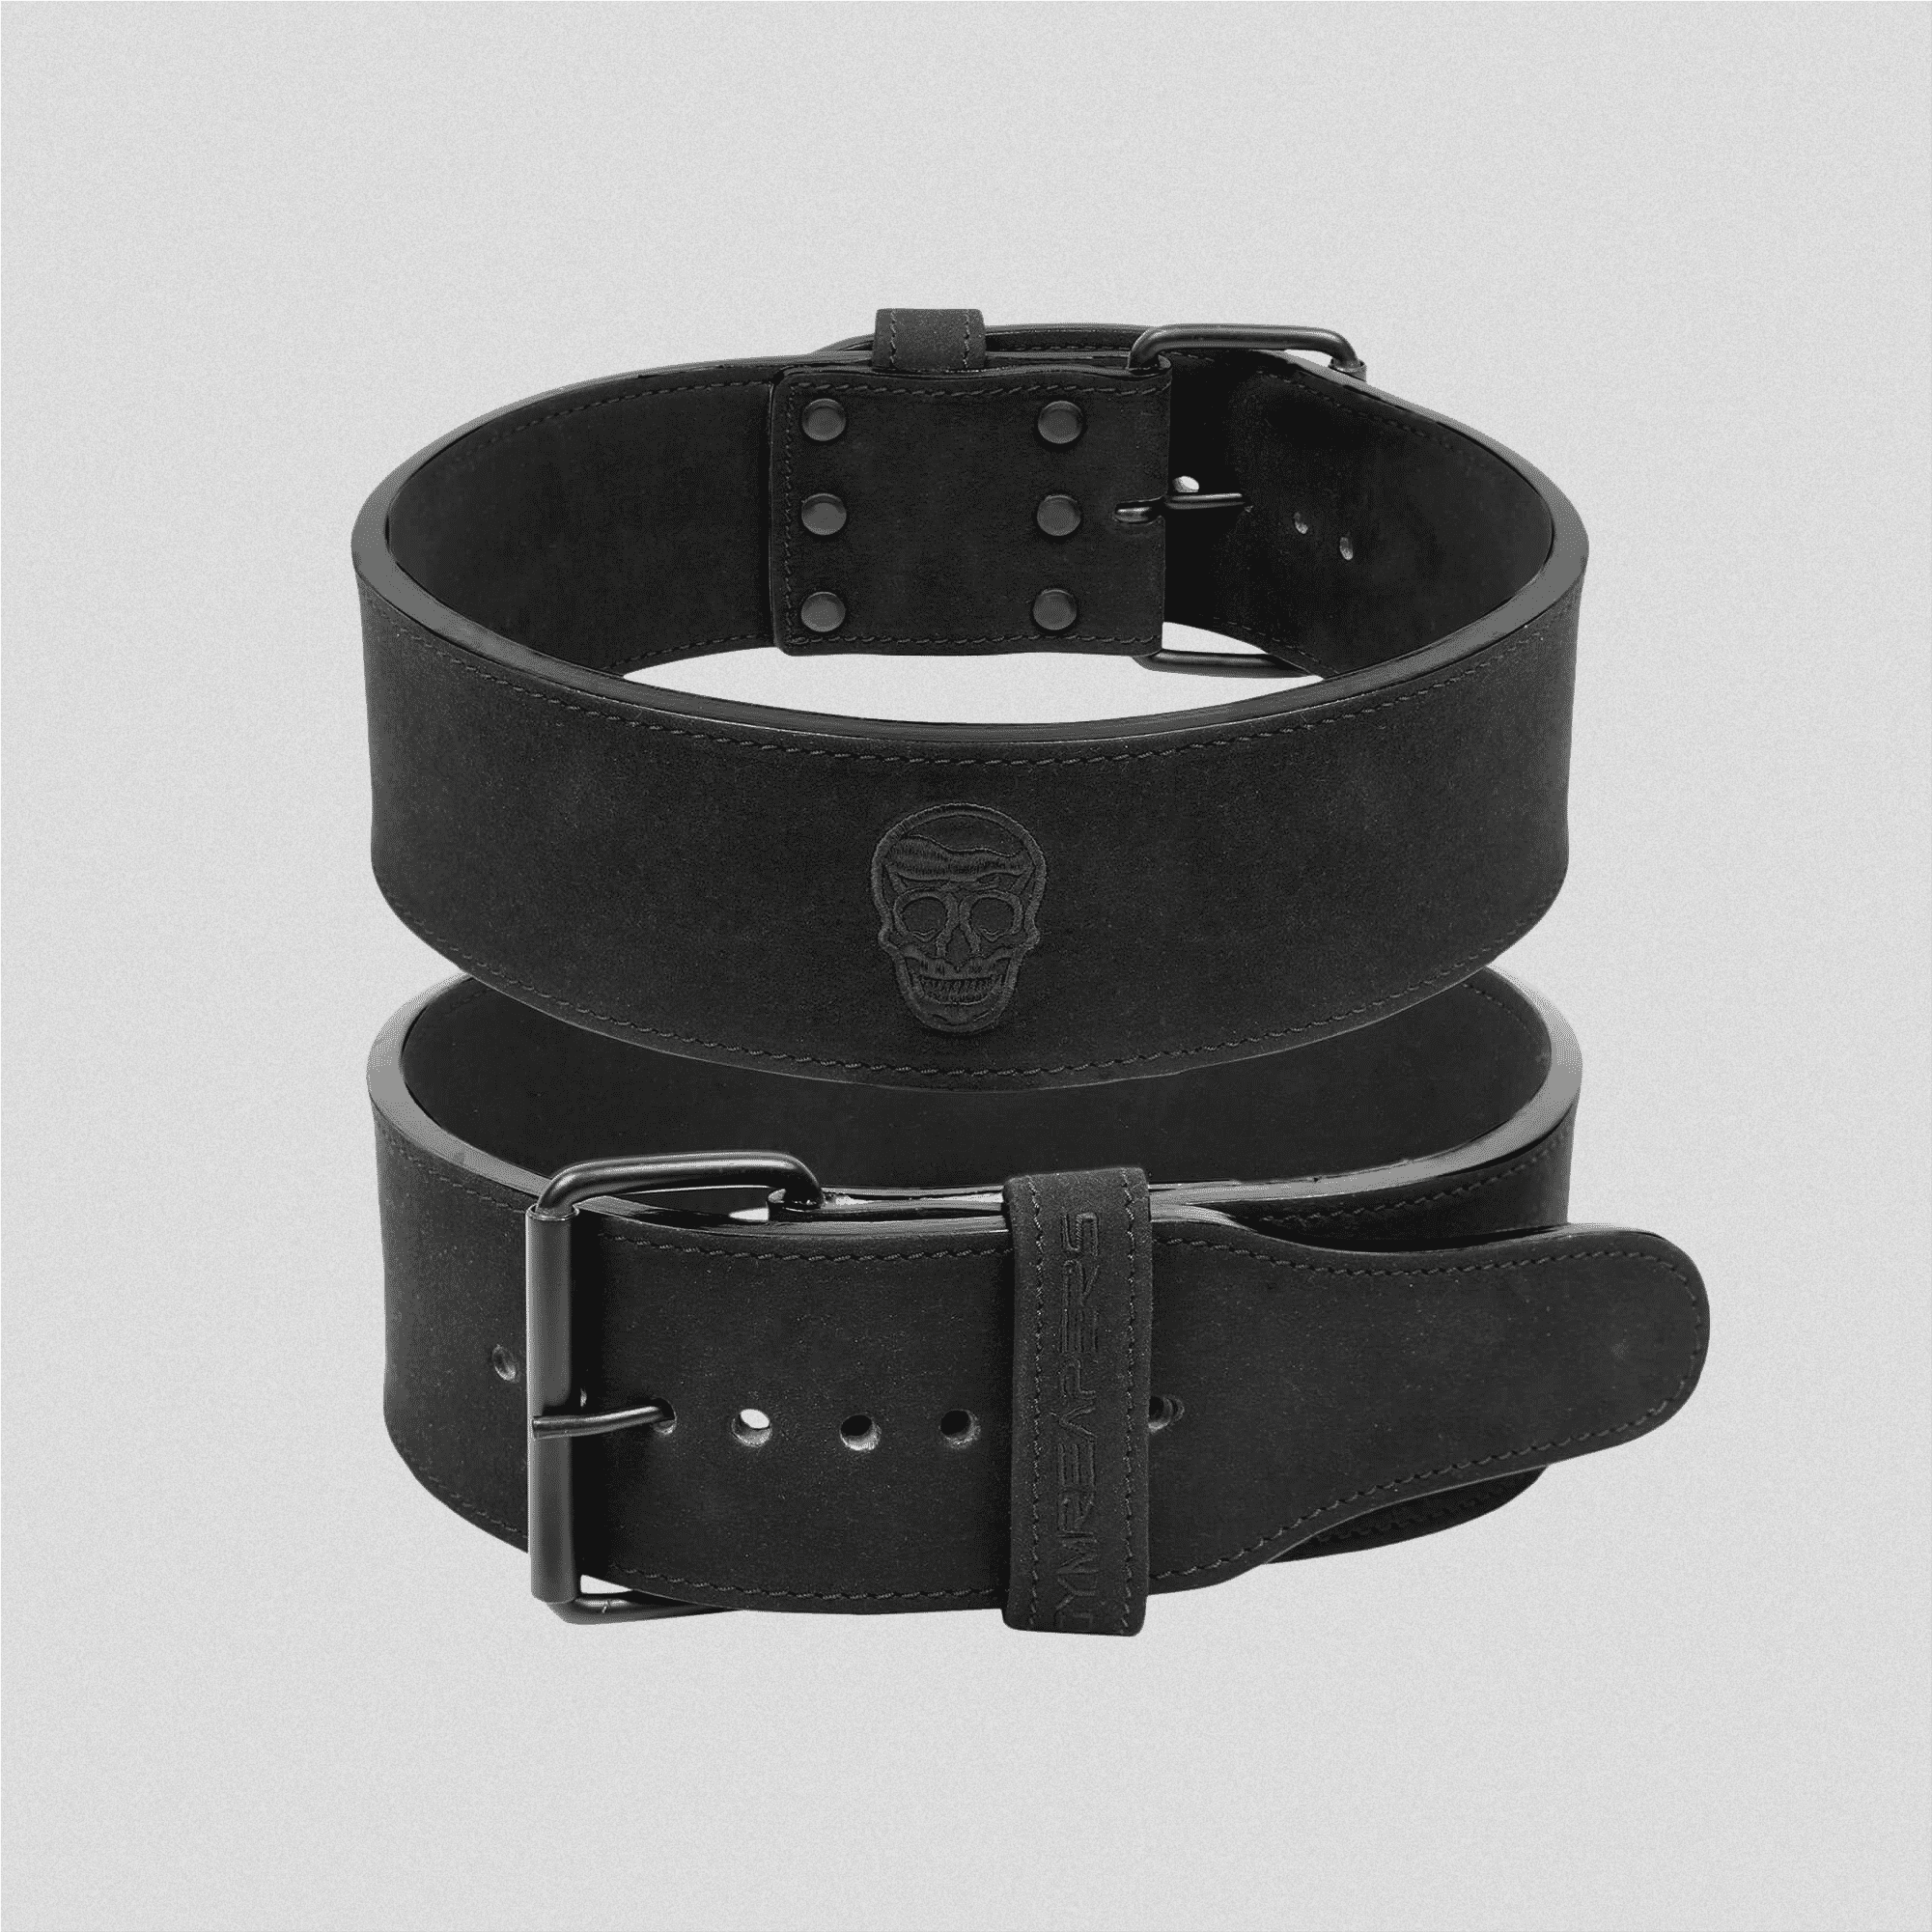 10mm single prong belt black stacked gray background